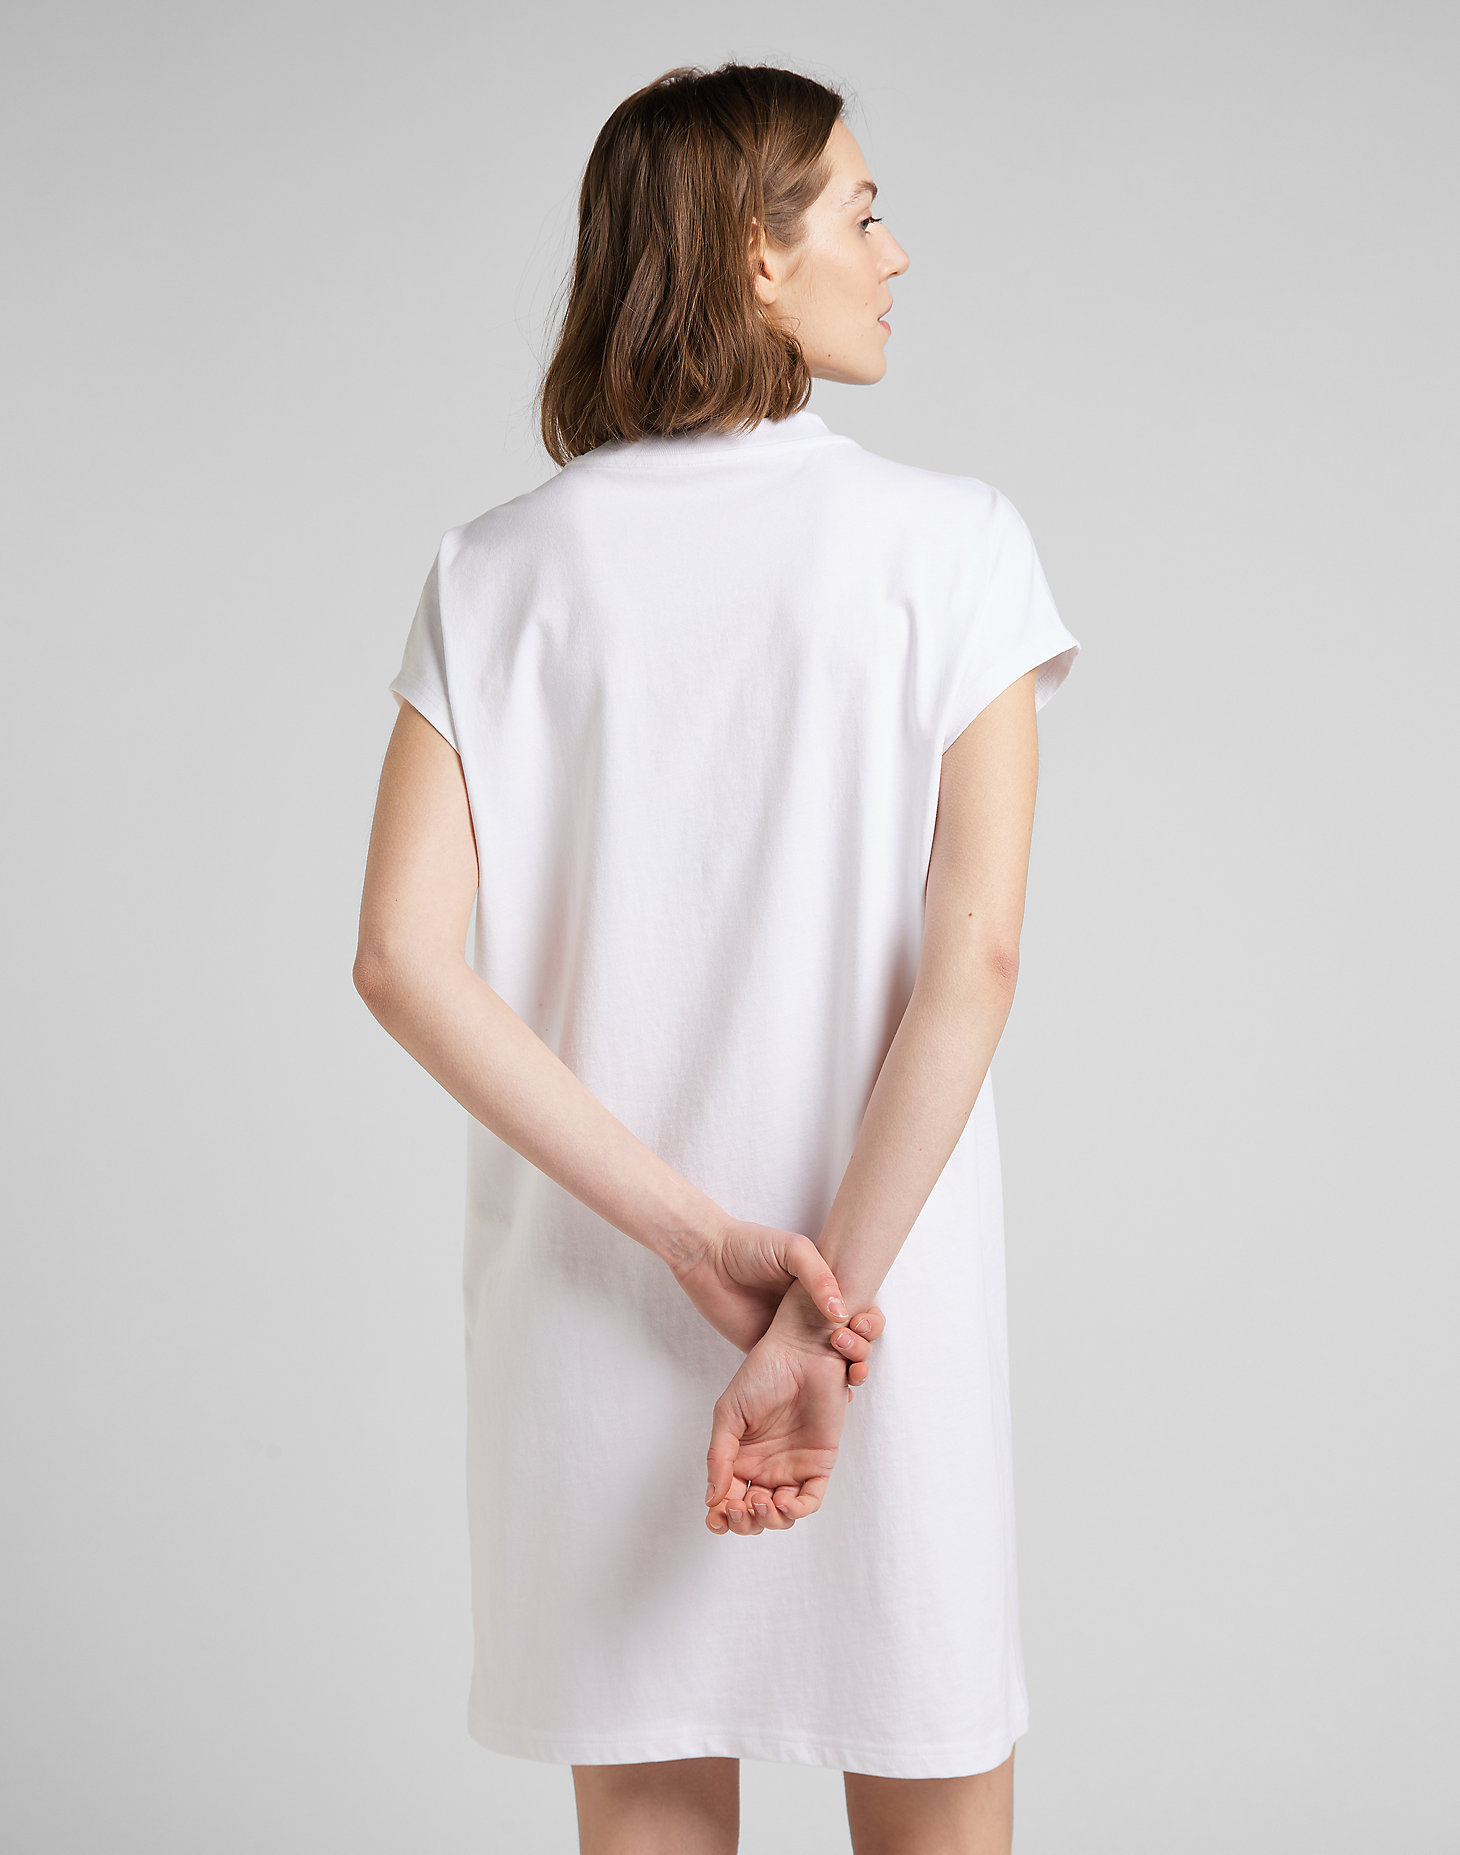 T-Shirt Dress in Bright White alternative view 1